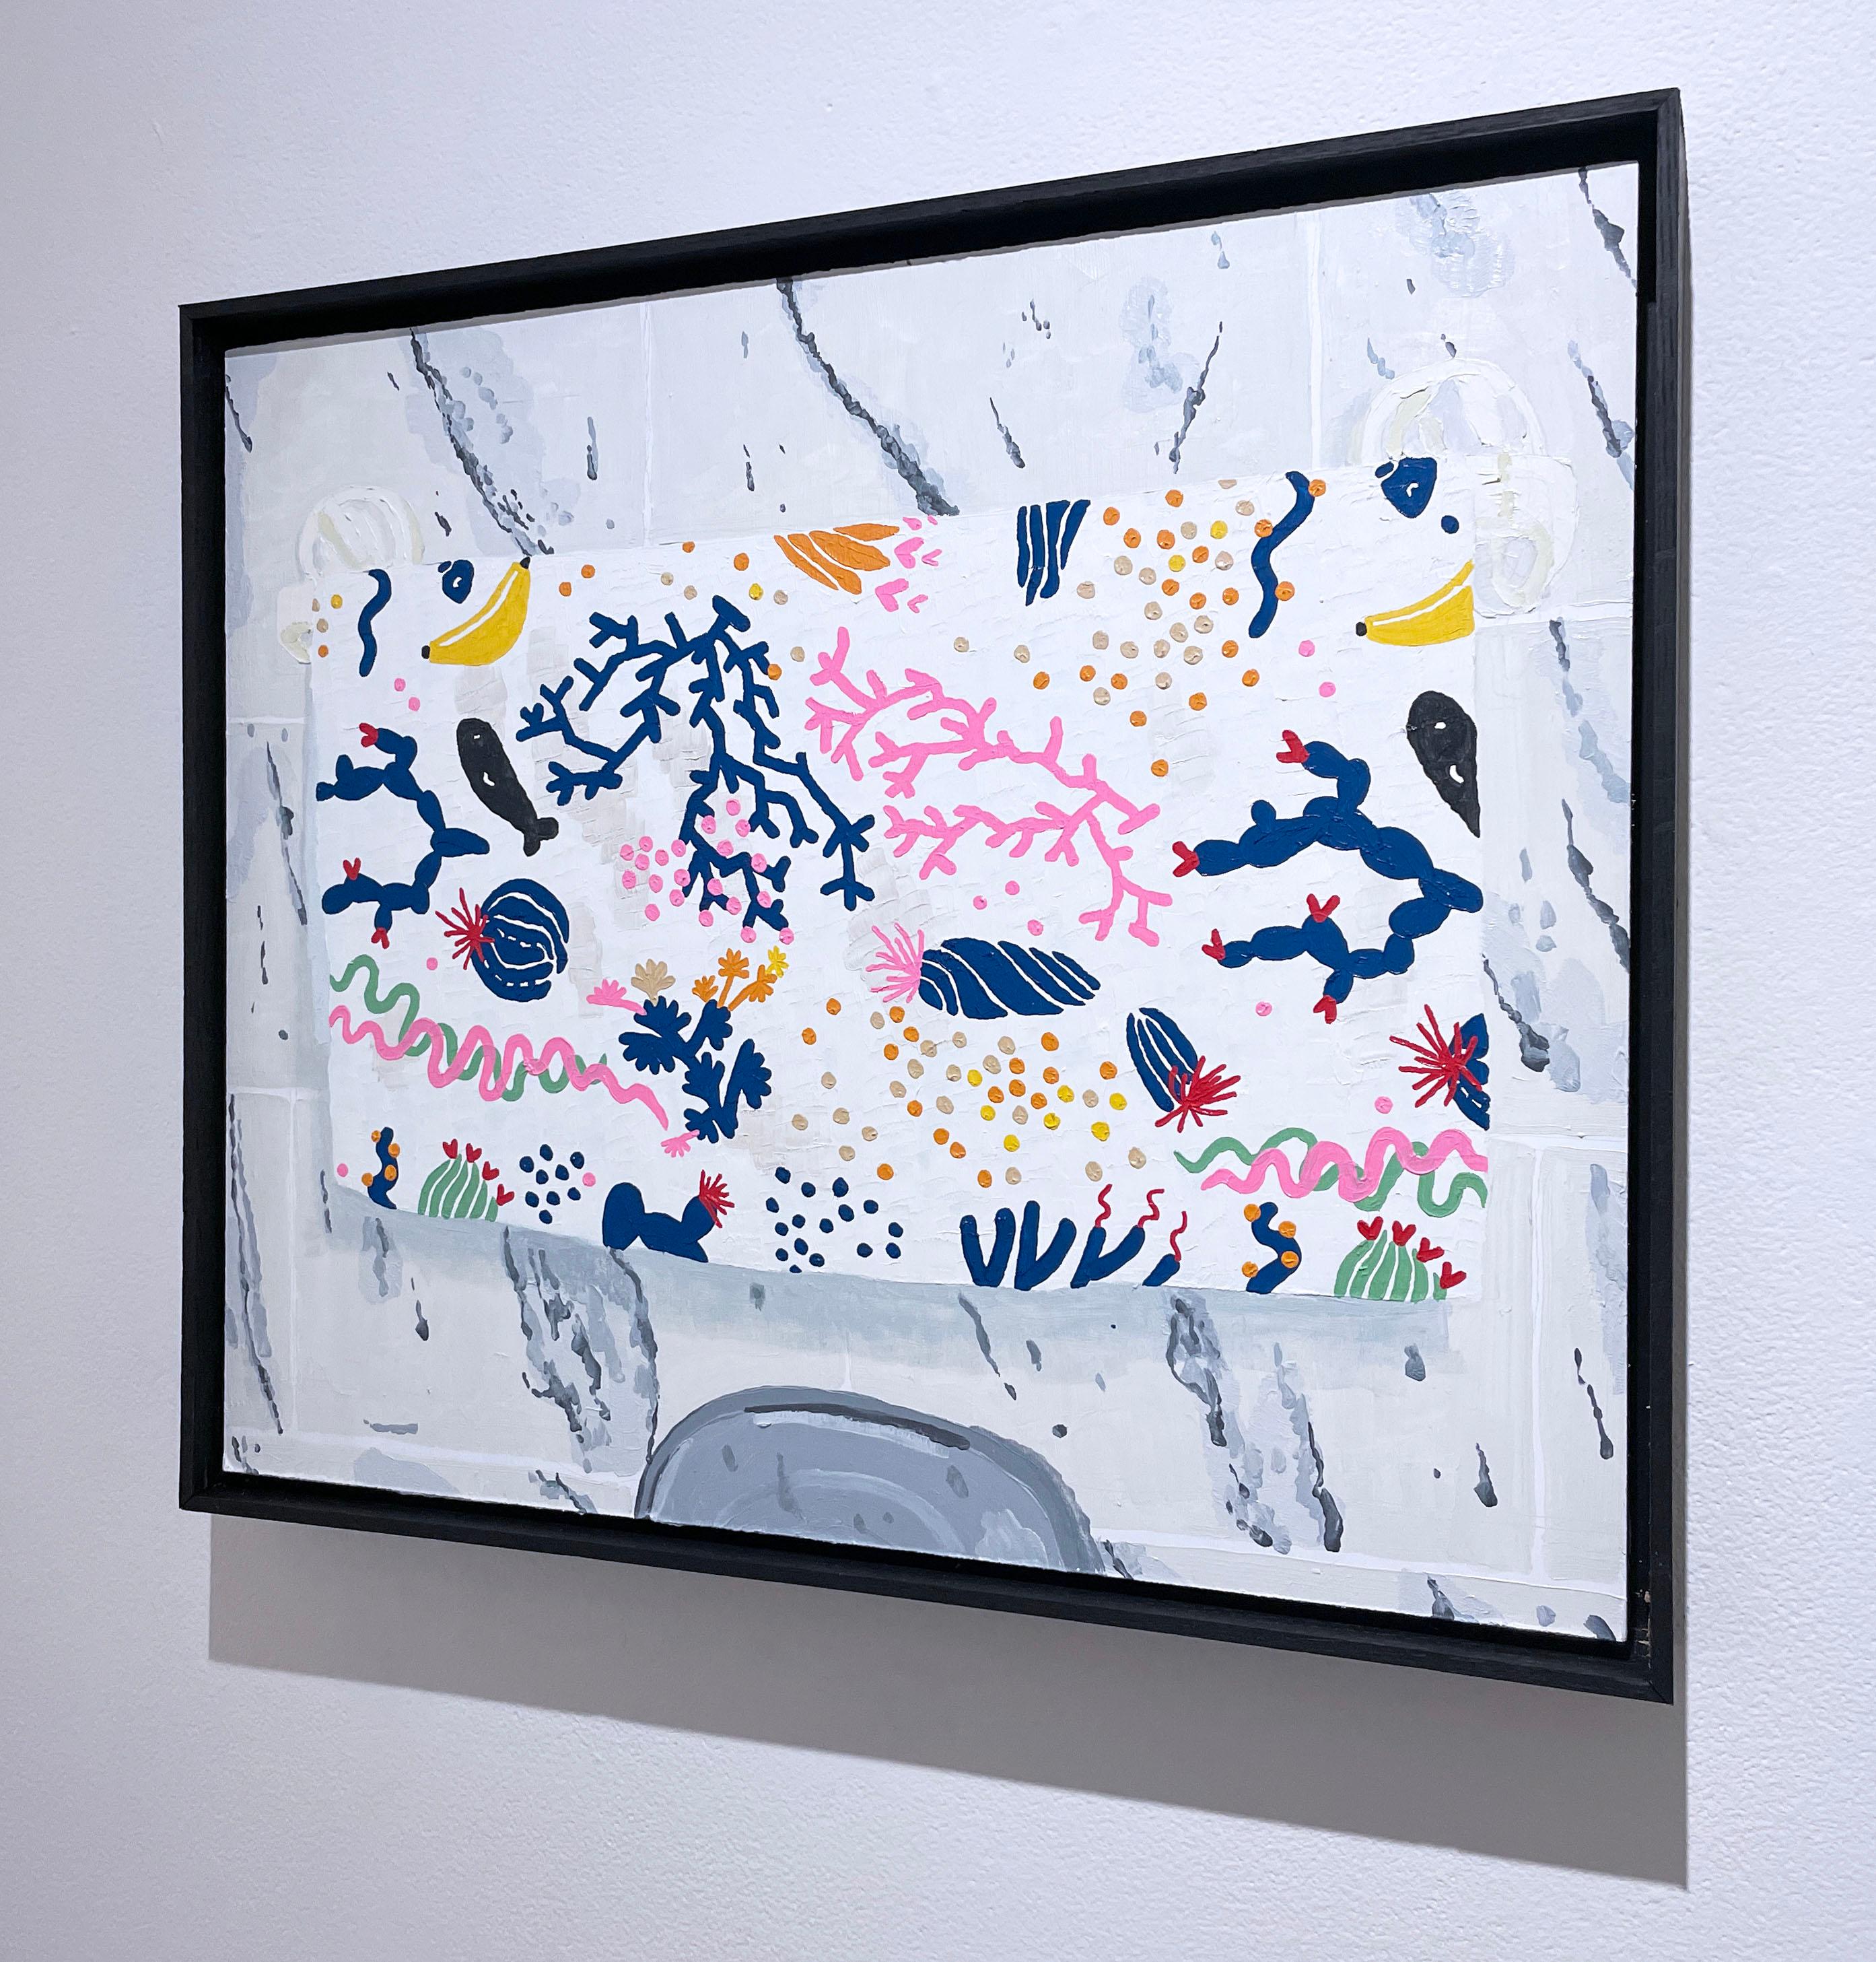 IKEA (2022), Öl auf Holzplatte, Korallenriff, Banane, helles Muster, naives Gemälde (Braun), Figurative Painting, von Max Vesuvius Budnick